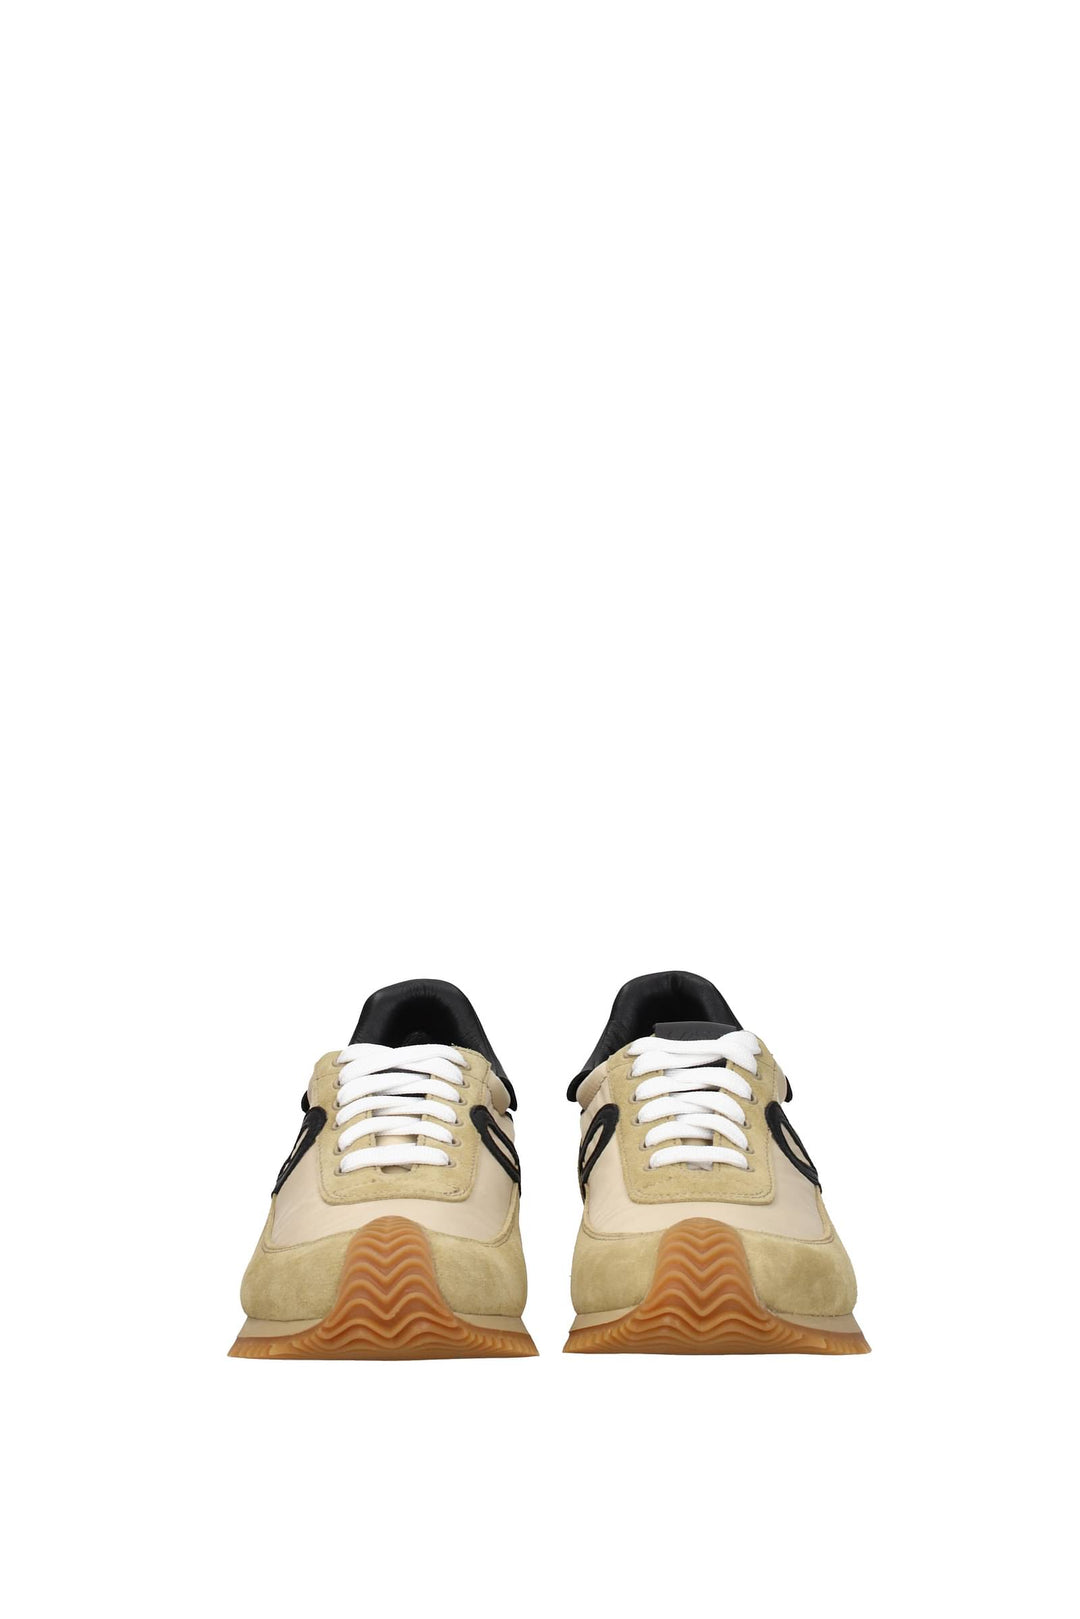 Sneakers Camoscio Beige Oro - Loewe - Donna